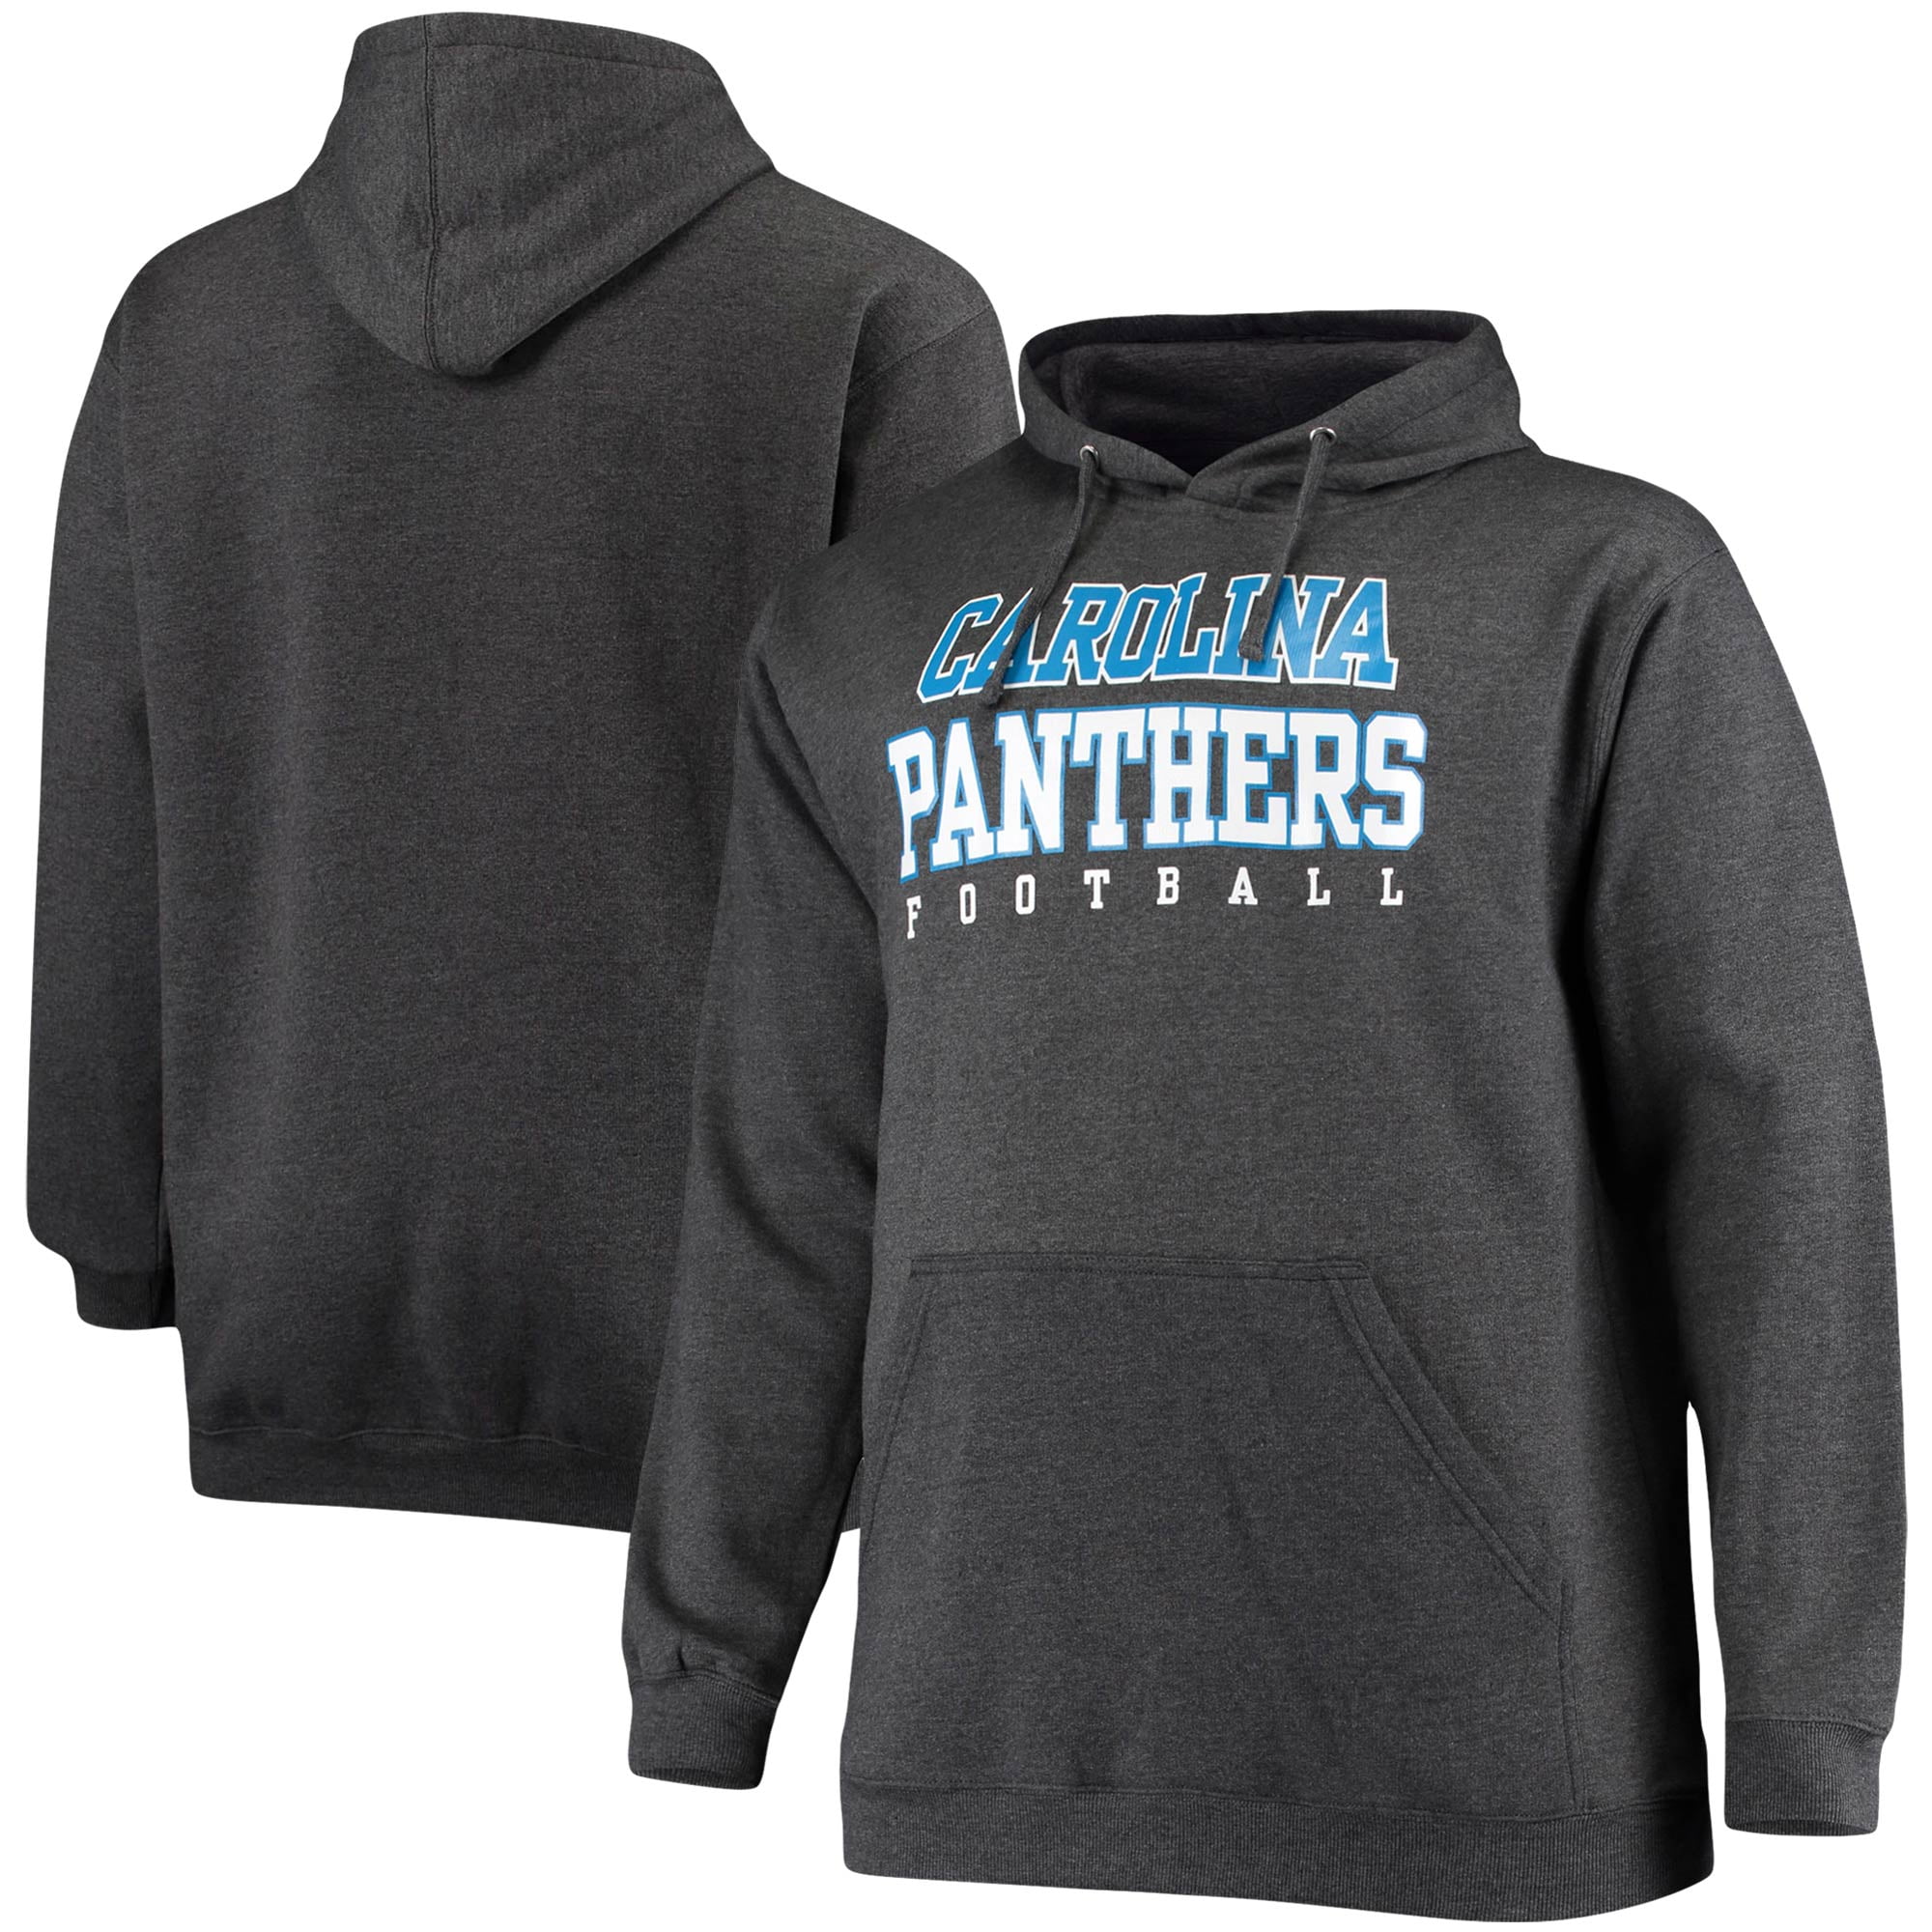 Carolina Panthers Sweatshirts - Walmart.com